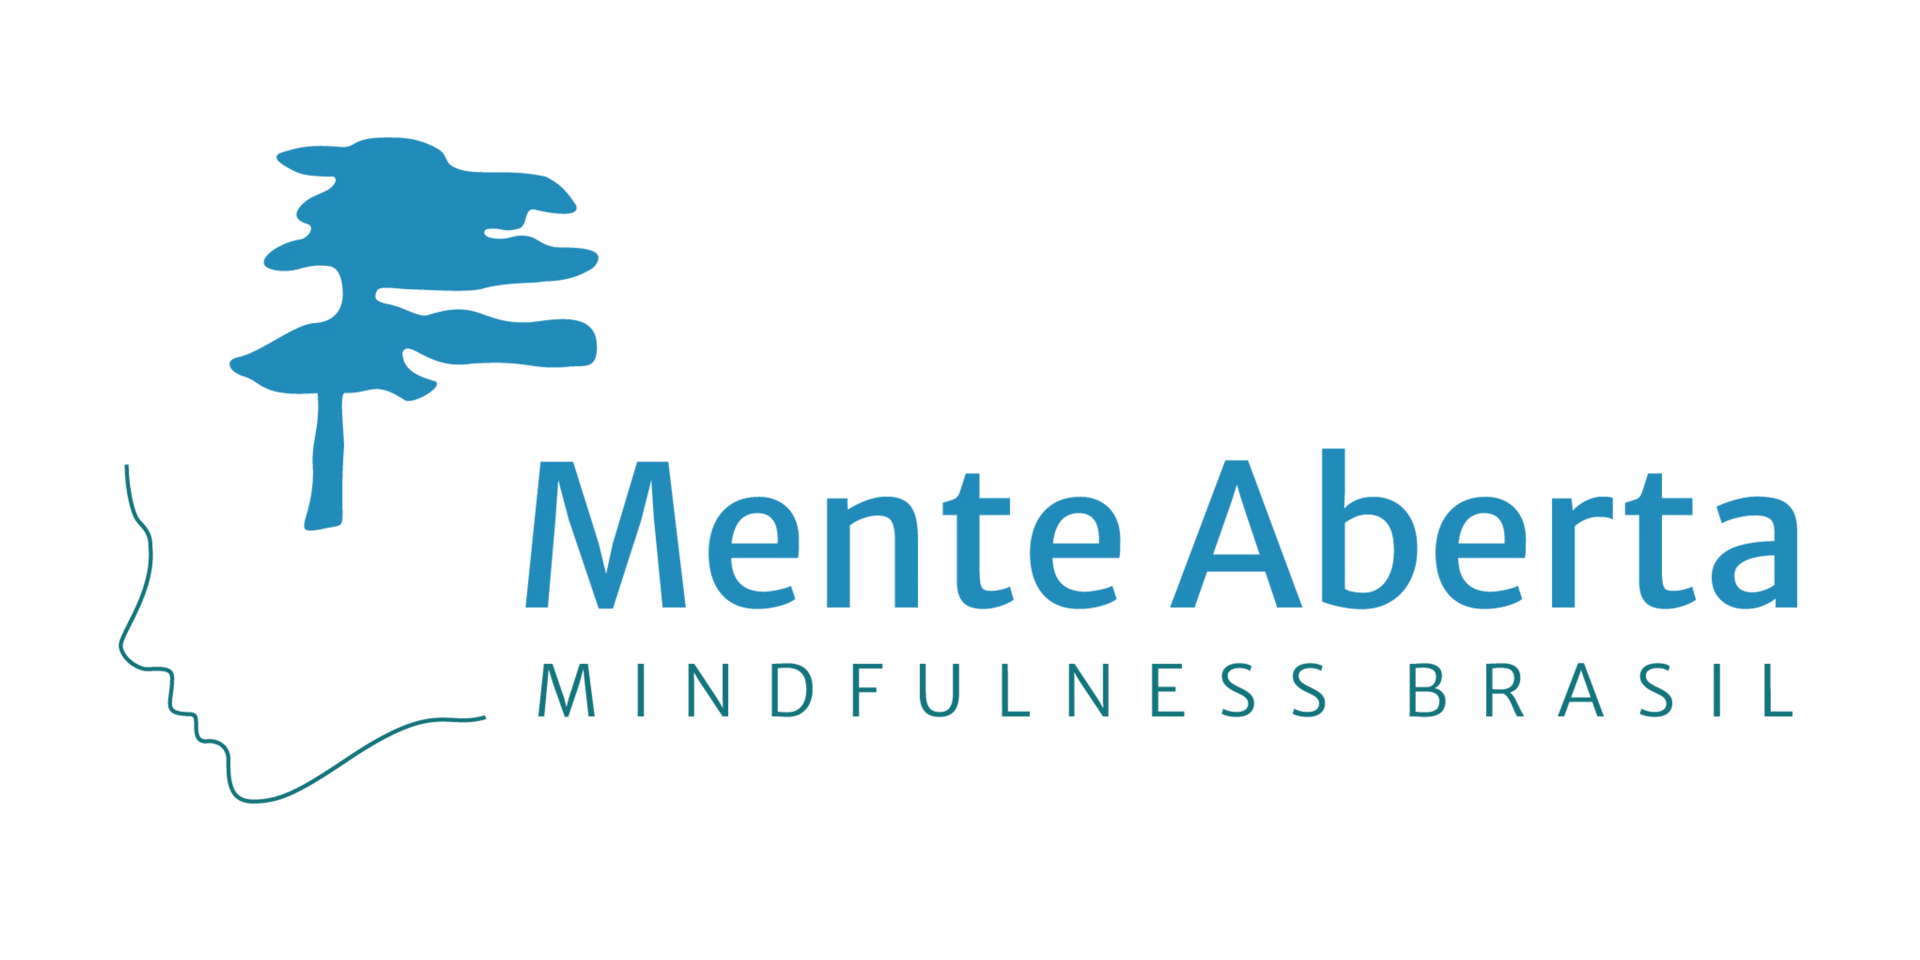 a logo for mente aberta mindfulness brasil